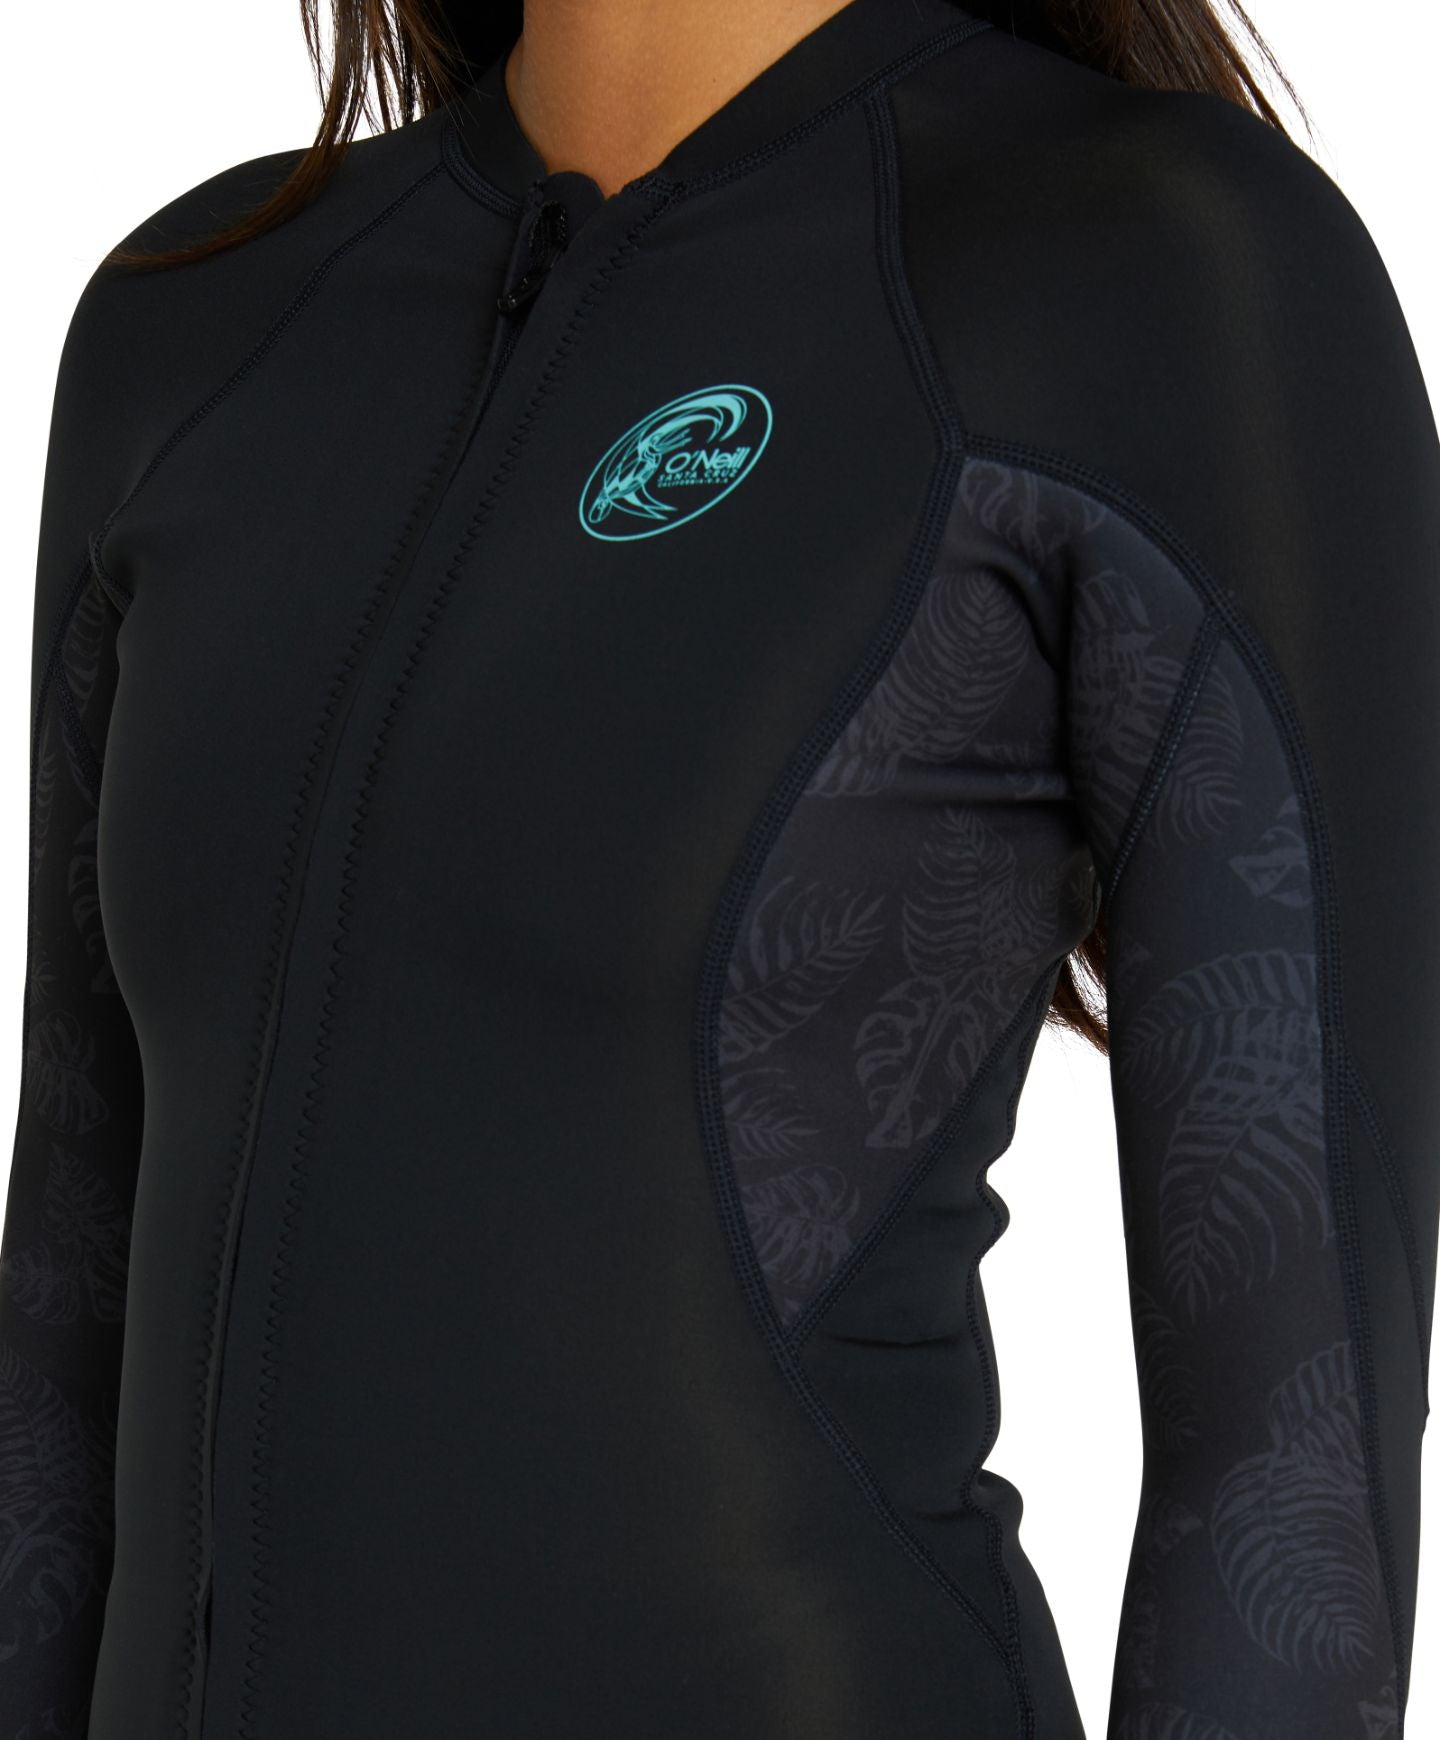 Women's Bahia 1.5mm Full Zip Wetsuit Jacket - Black Night Jungle